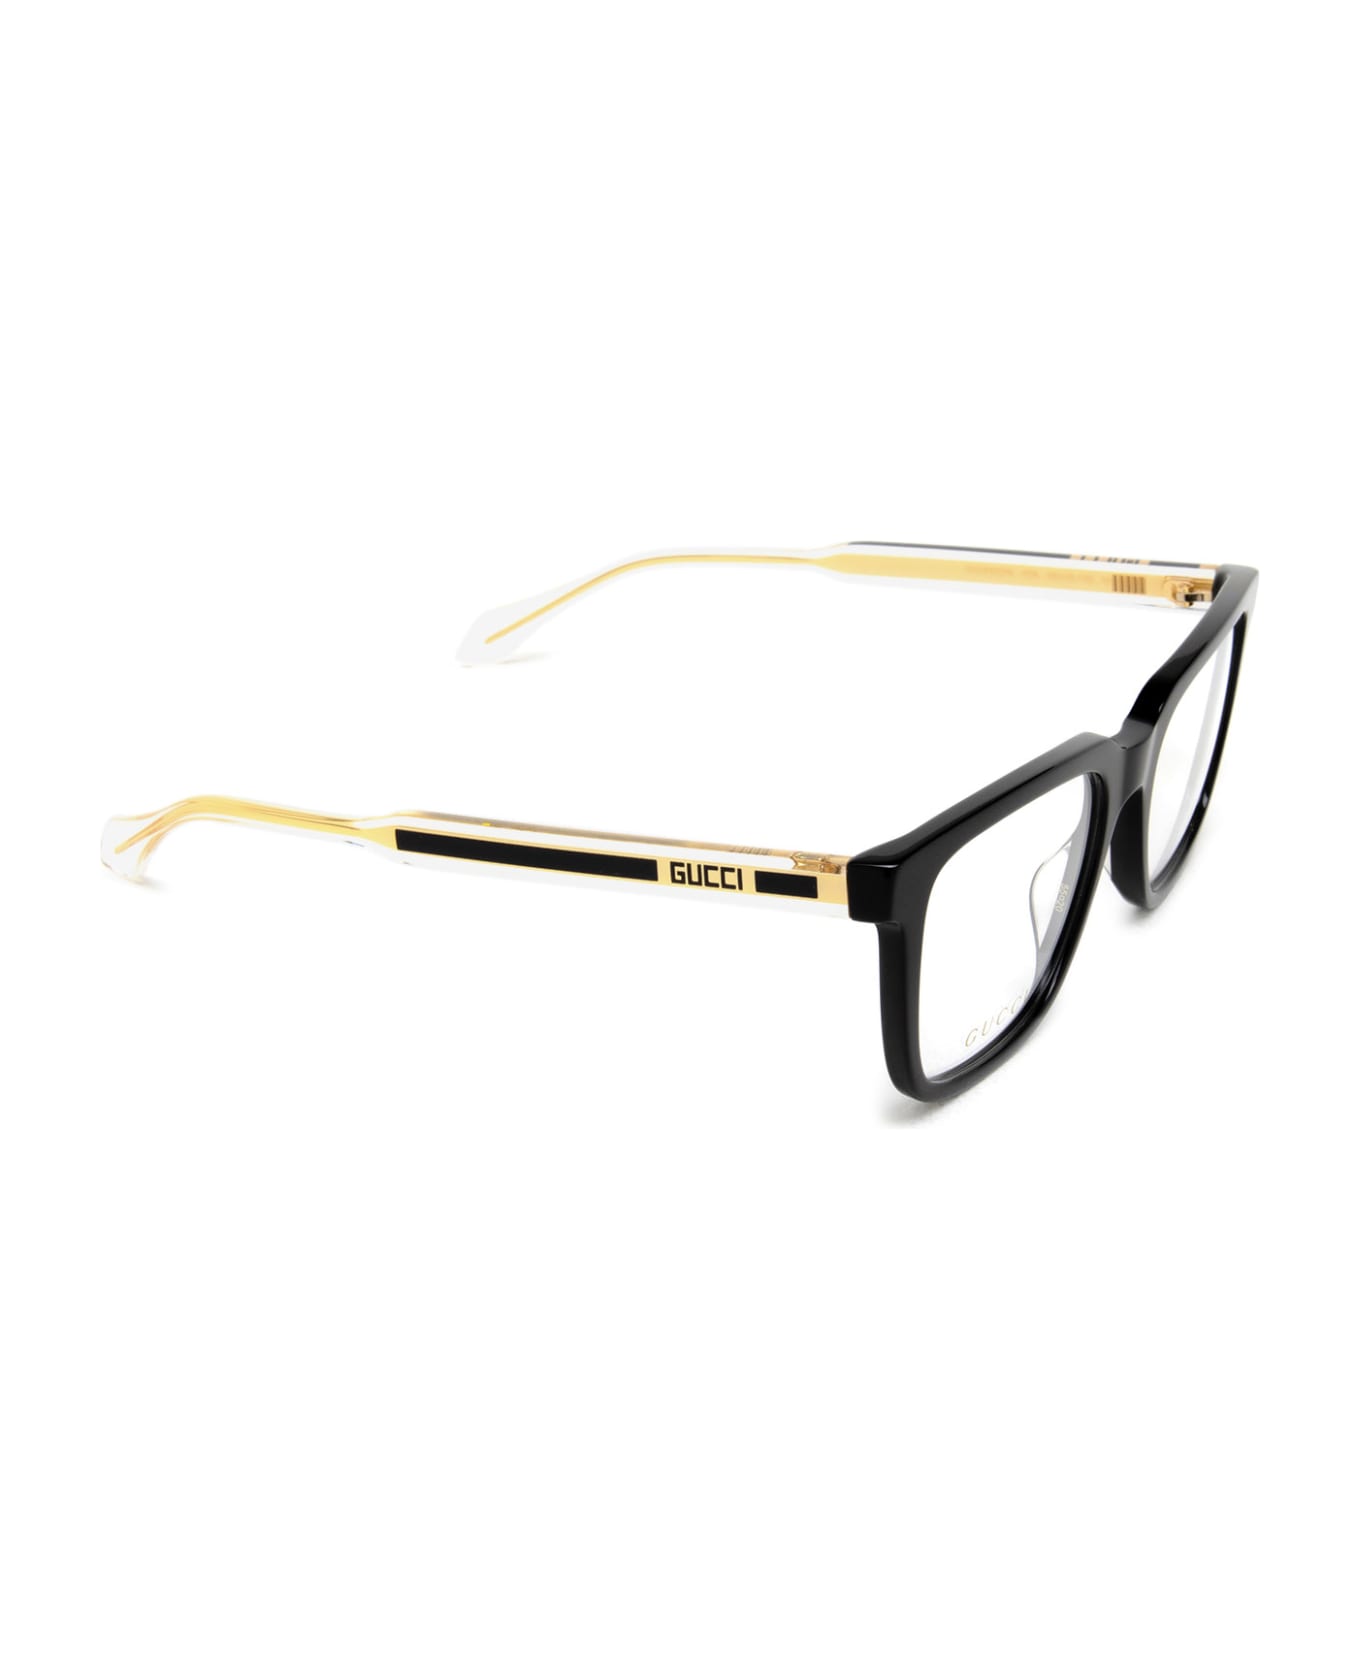 Gucci Eyewear Gg0560on Black Glasses - Black アイウェア